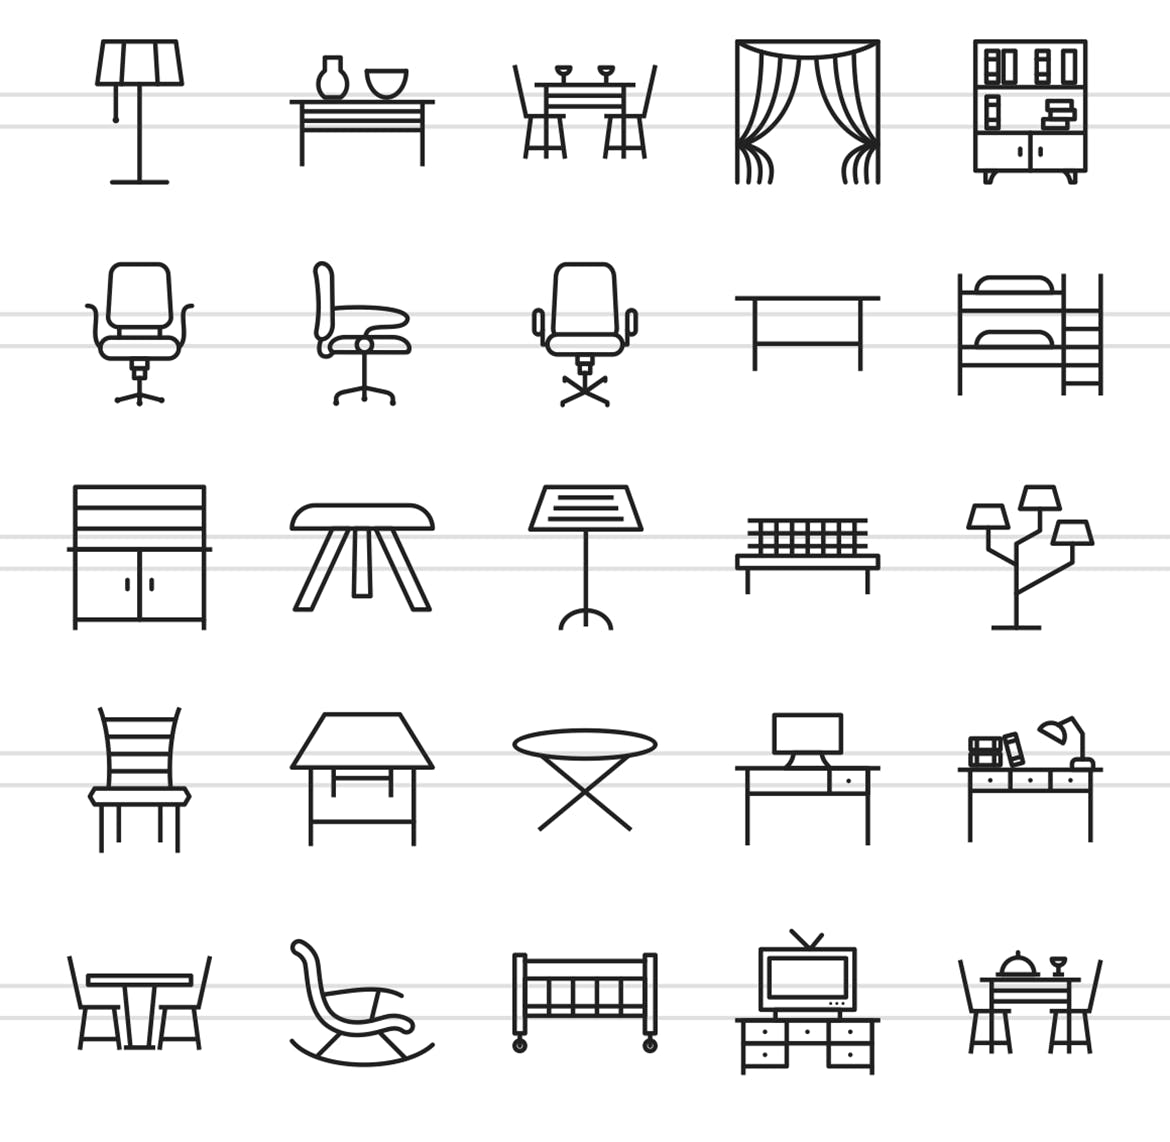 50枚家具系列线性素材天下精选图标 II 50 Furniture Line Icons Season II插图(2)